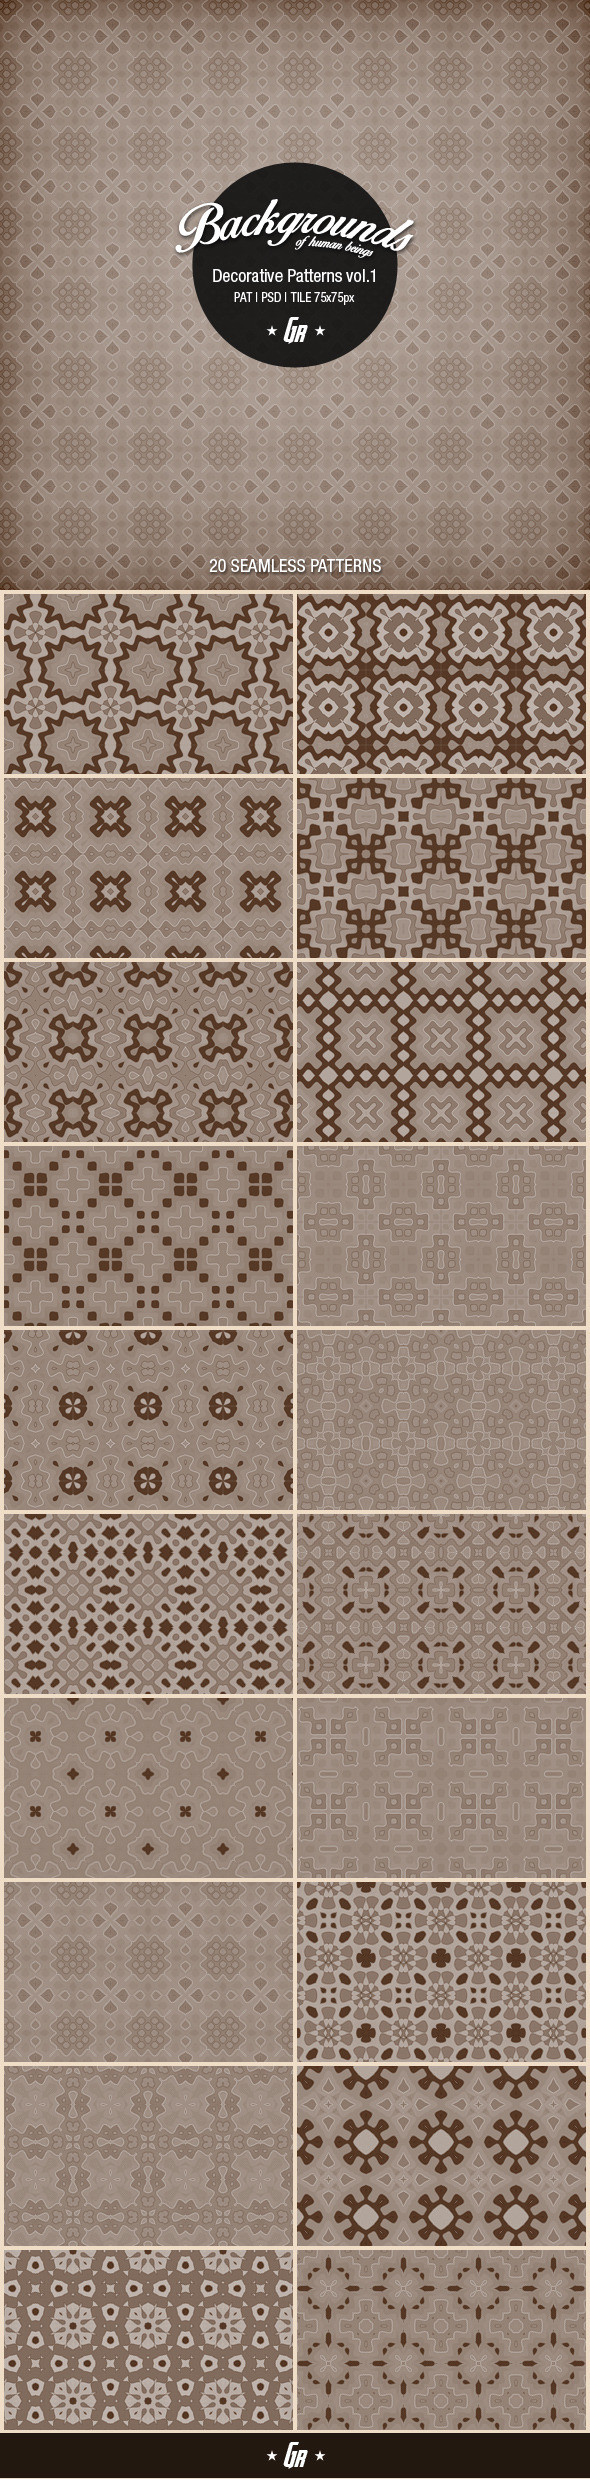 Decorative patterns vol1 preview